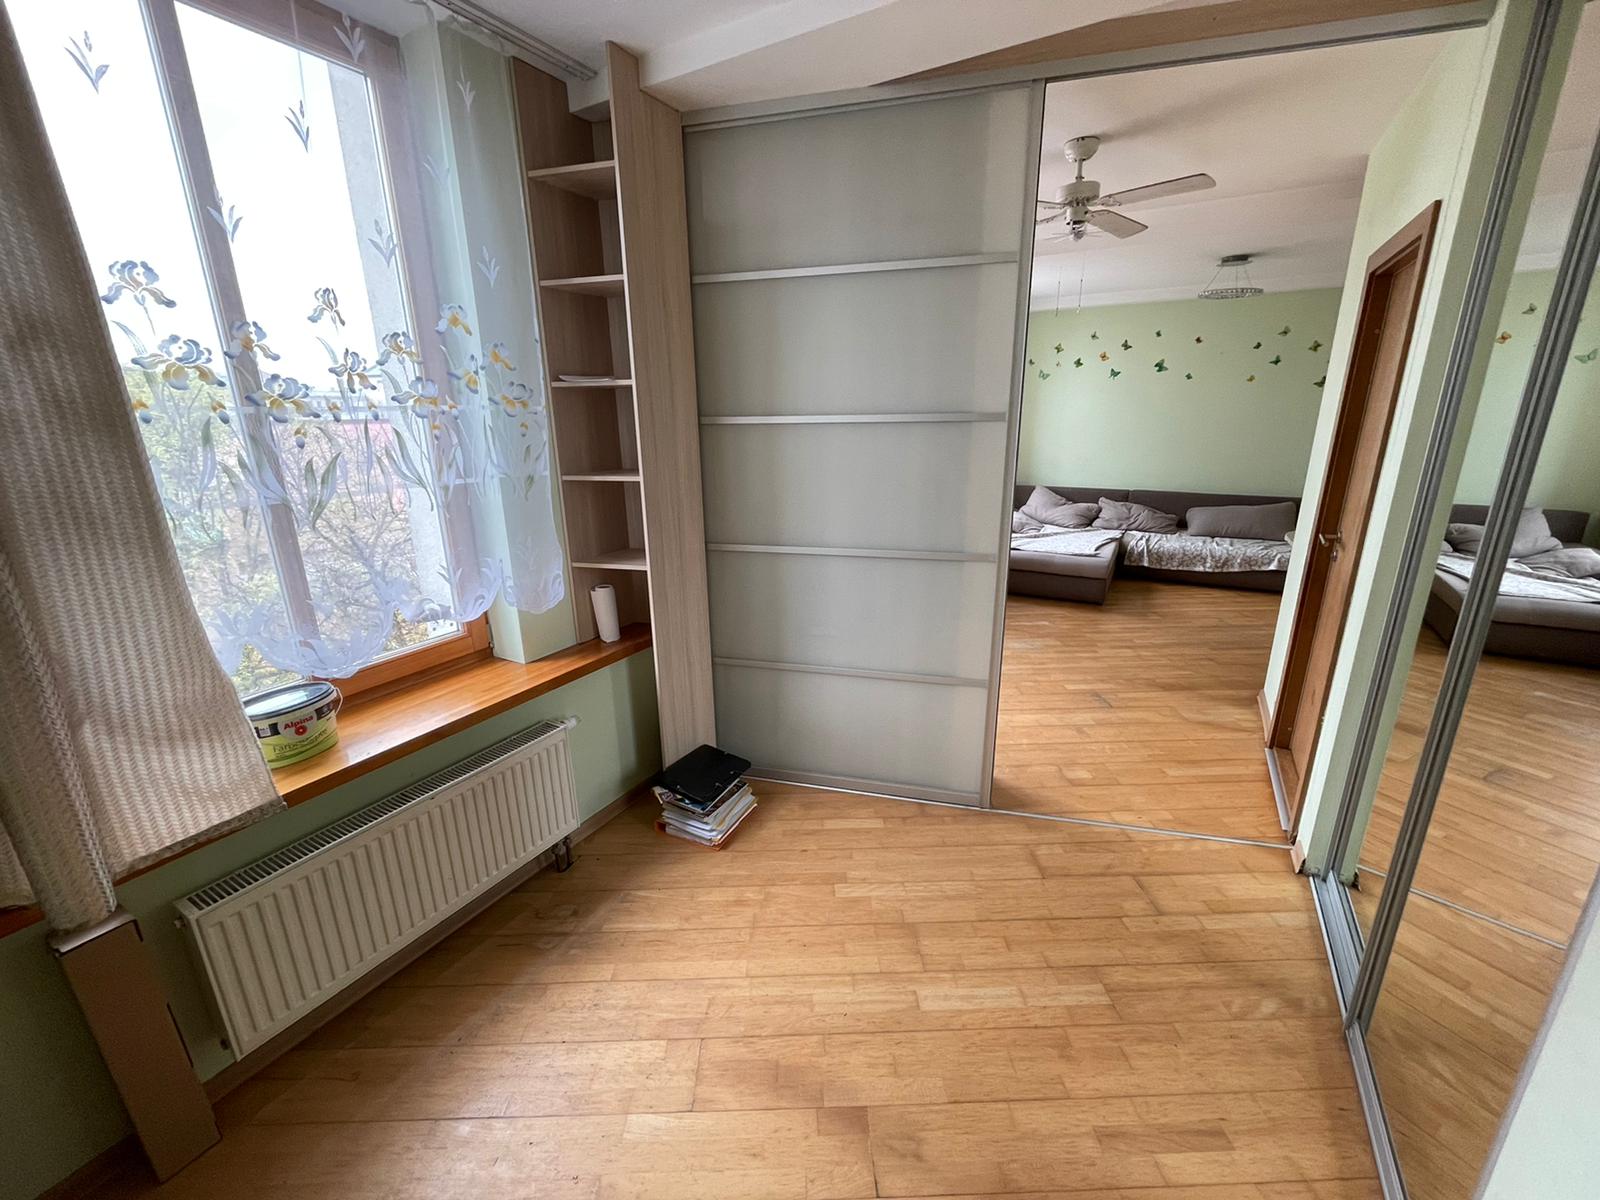 Apartment for sale, Lāčplēša iela street 87E - Image 1